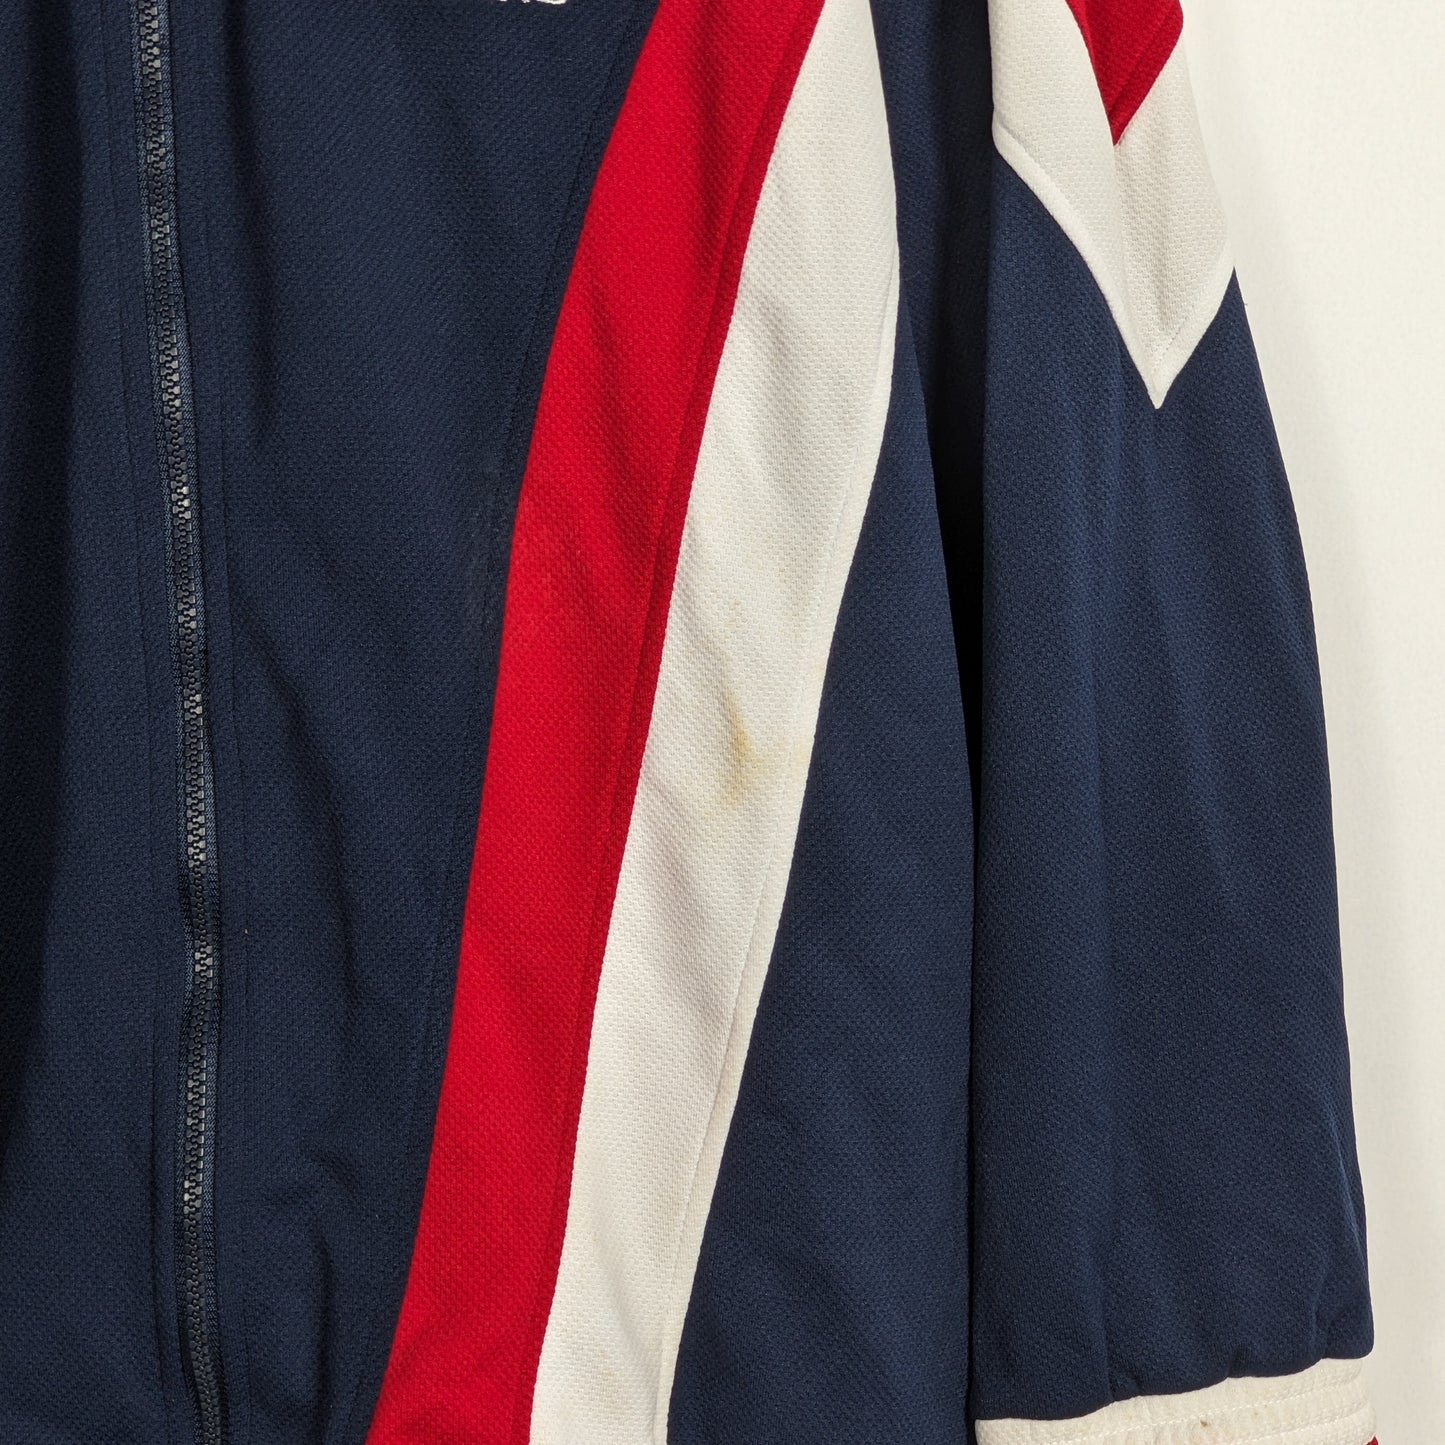 Authentic England Track Jacket 1998/1999 - Size XL